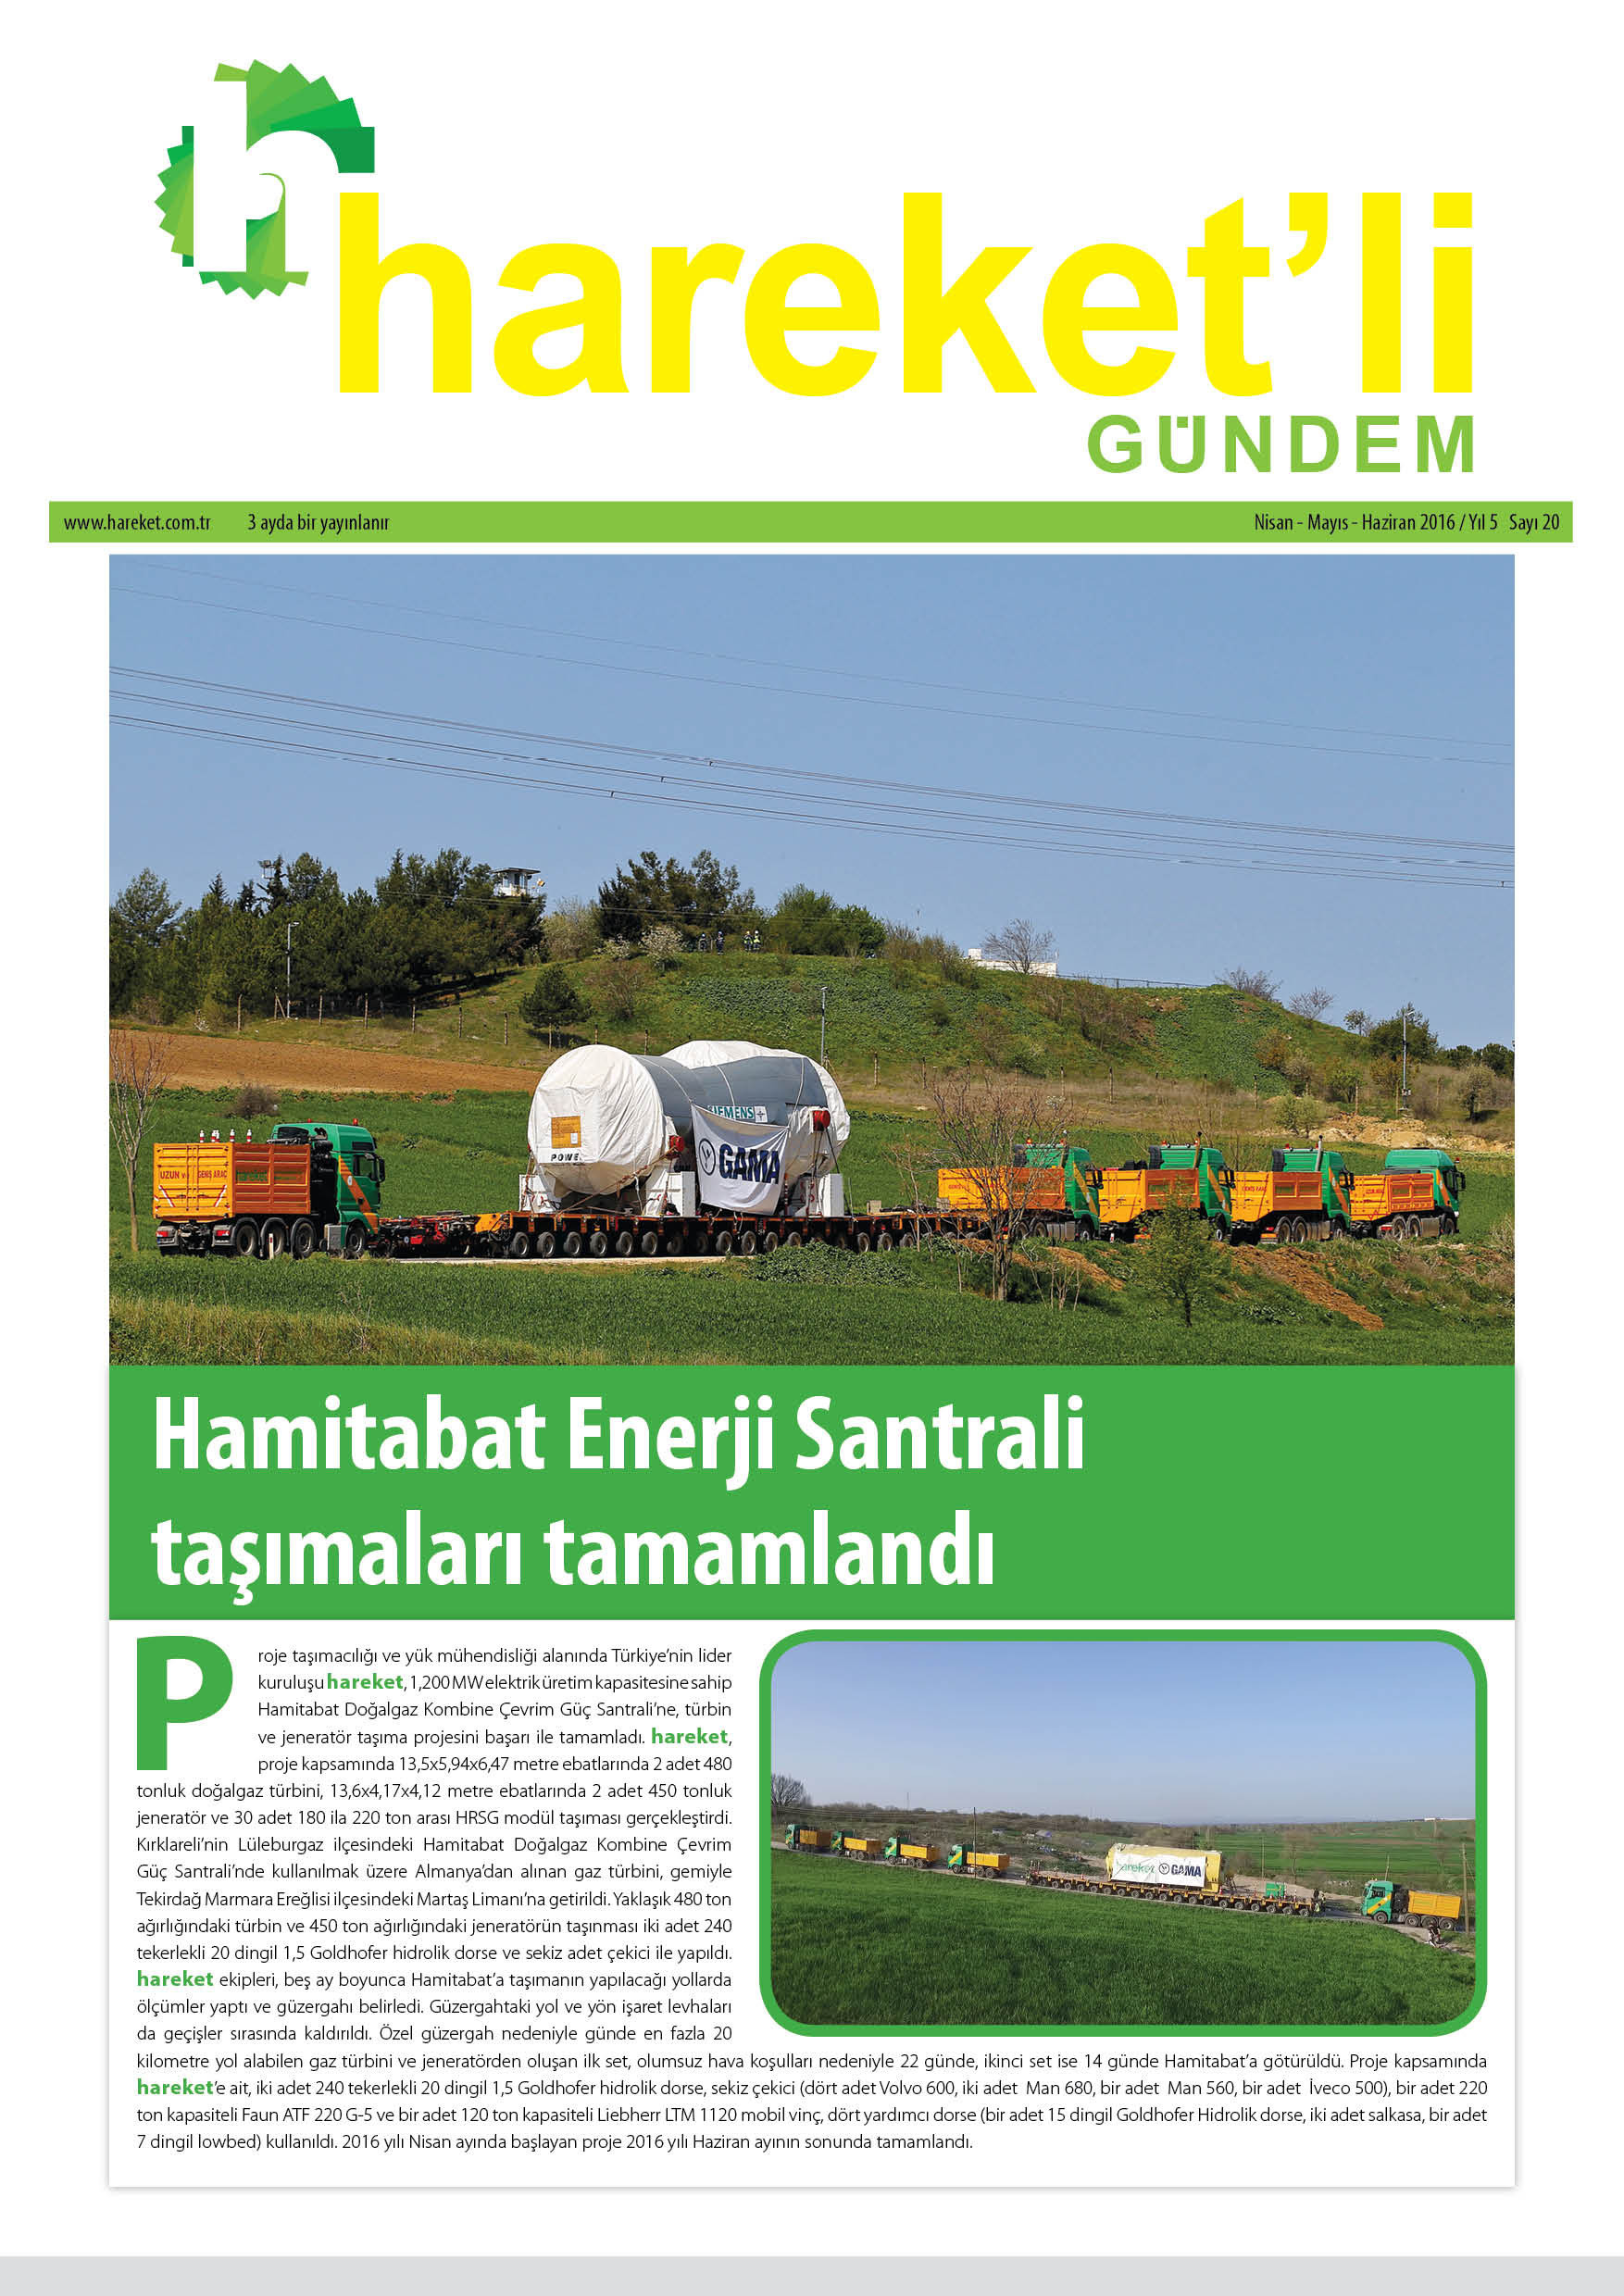 Hareket'li Gündem Magazine - ISSEU 20